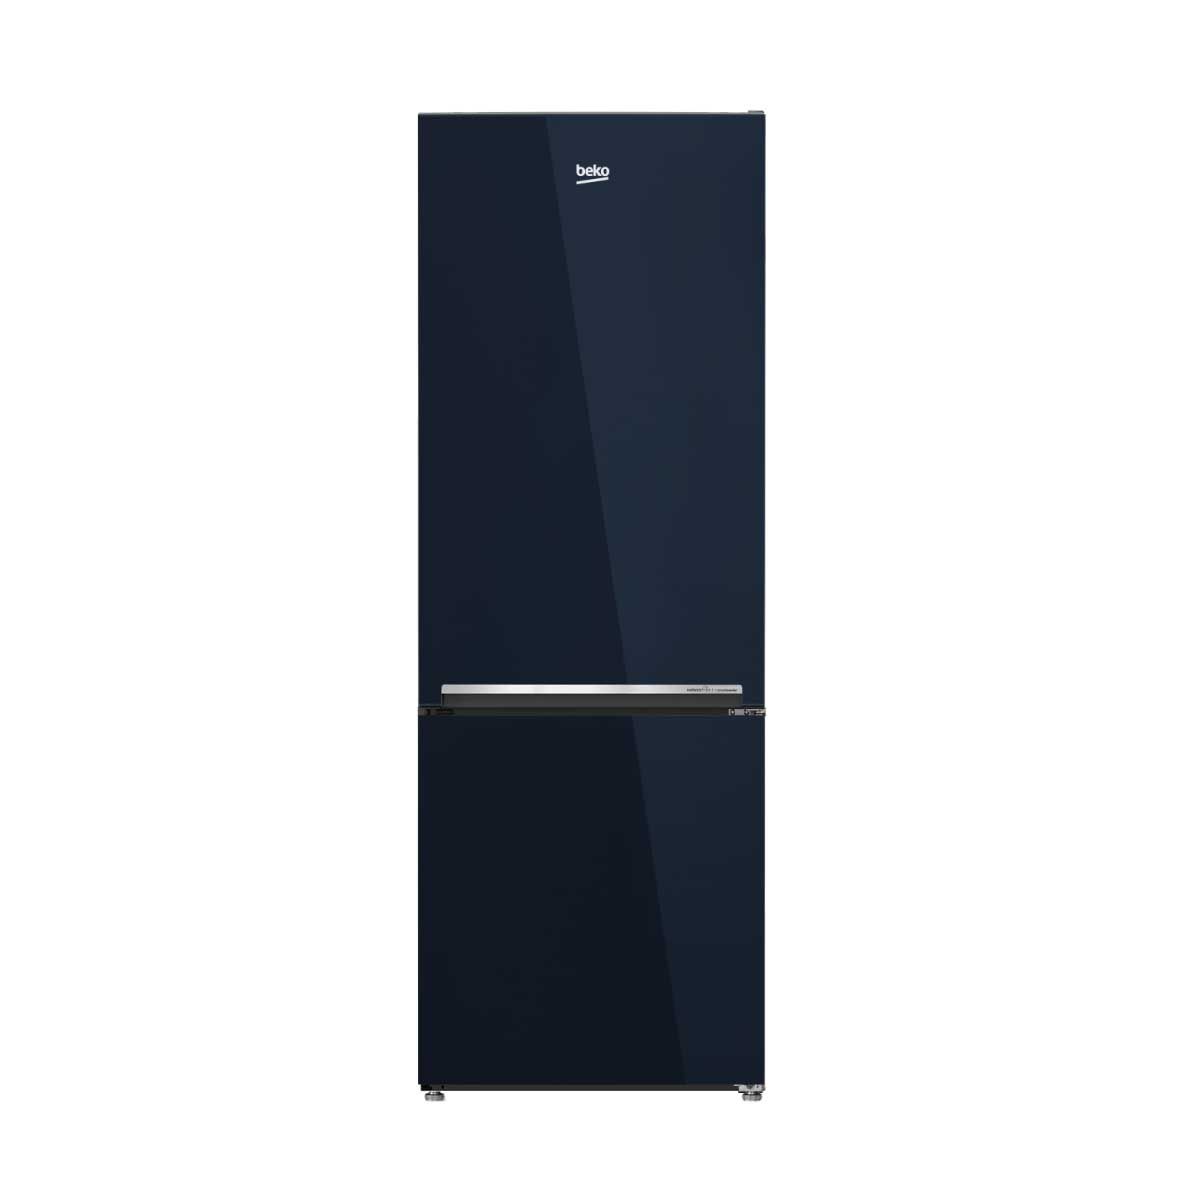 BEKO ตู้เย็น 2 ประตู 11.4 คิว Bottom Freezer  Inverter รุ่น RCNT340I30VHFSUBL สี Ocean Blue